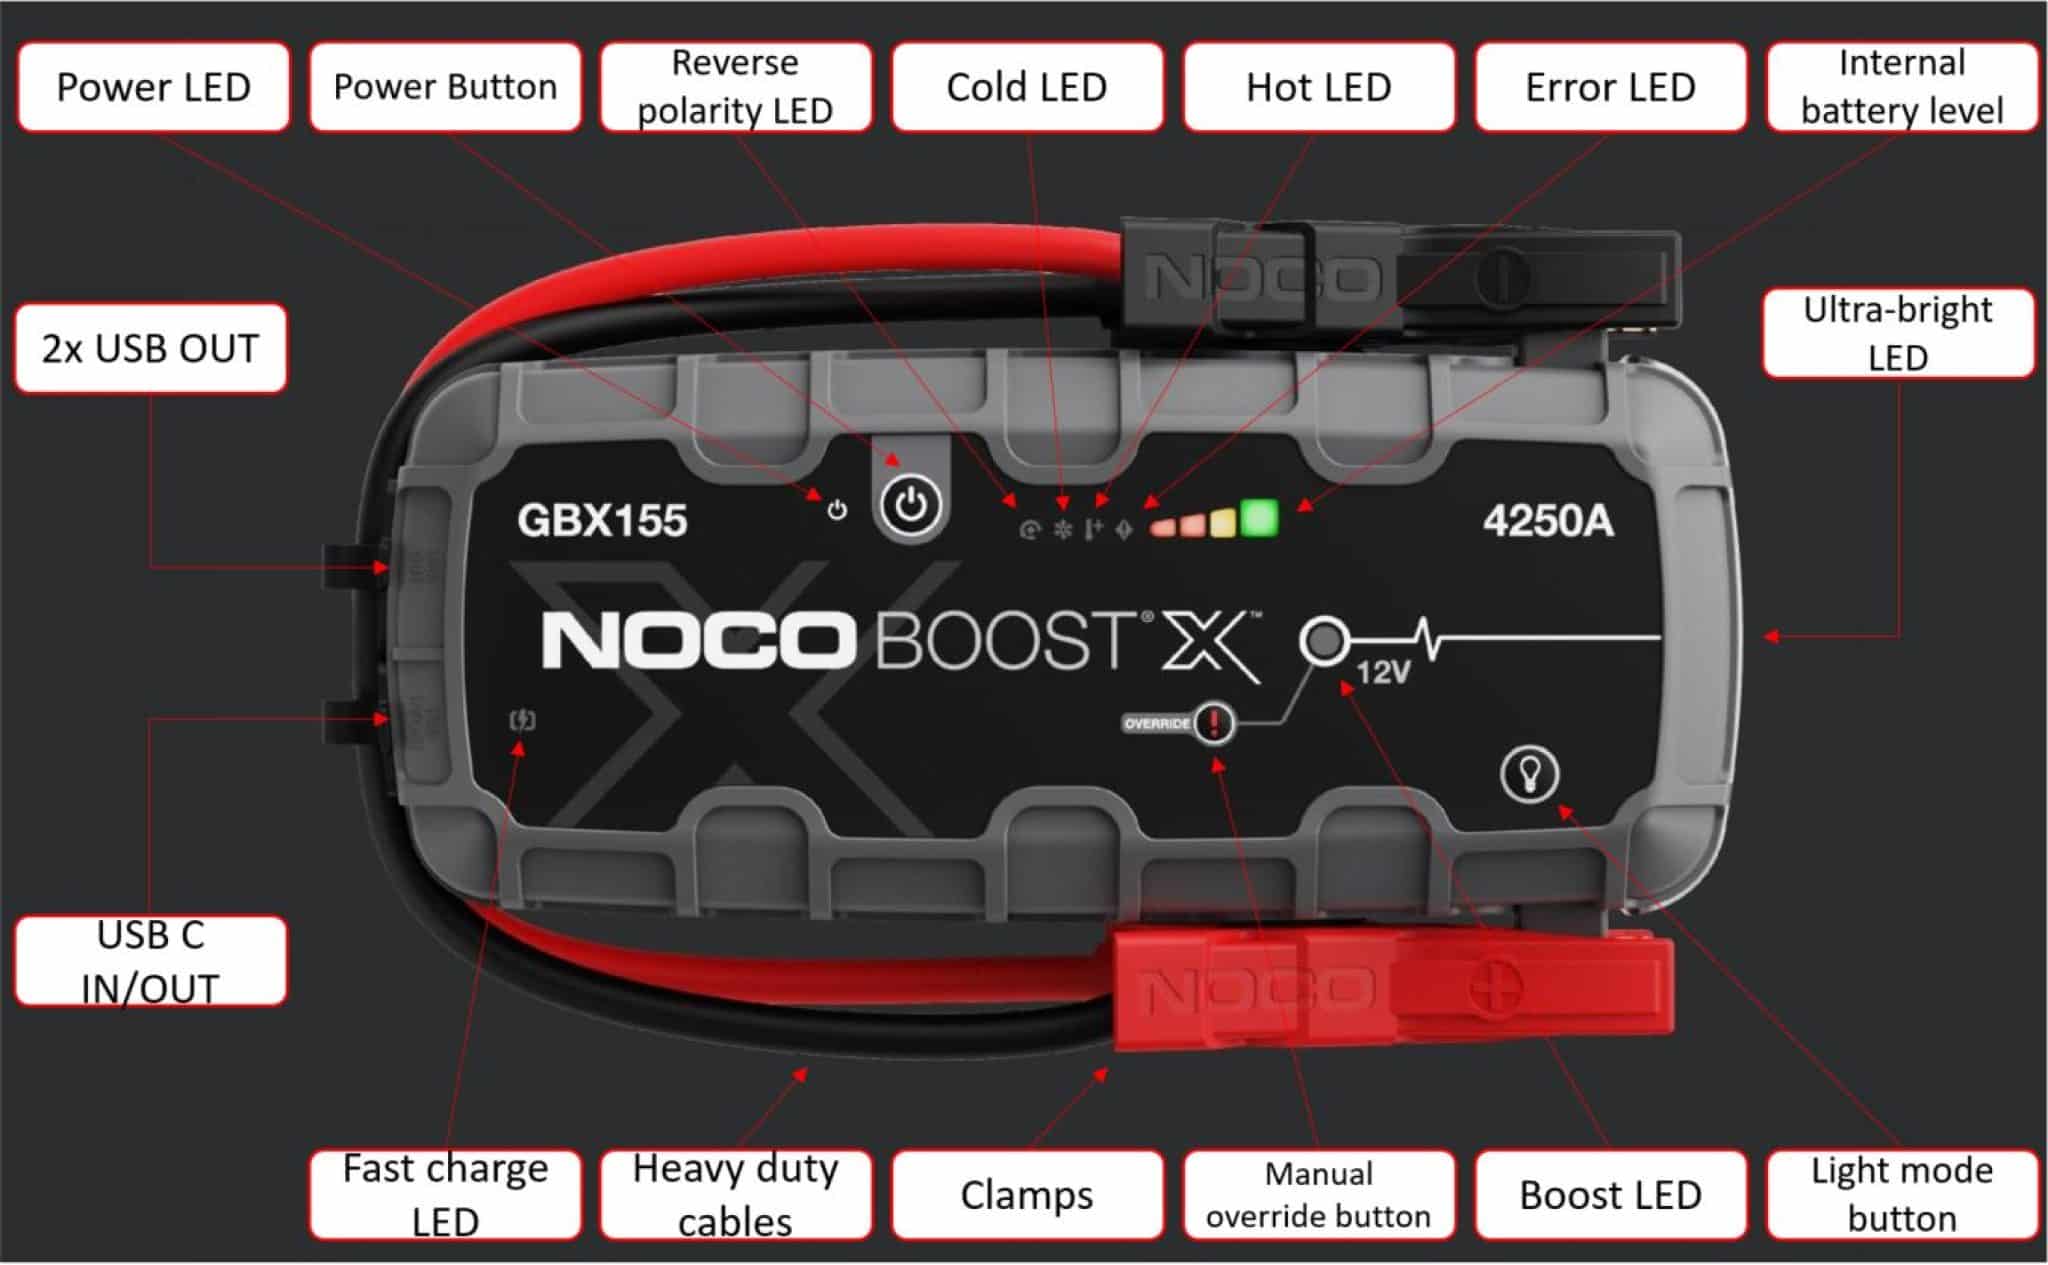 NOCO GBX 155 external controls and button description